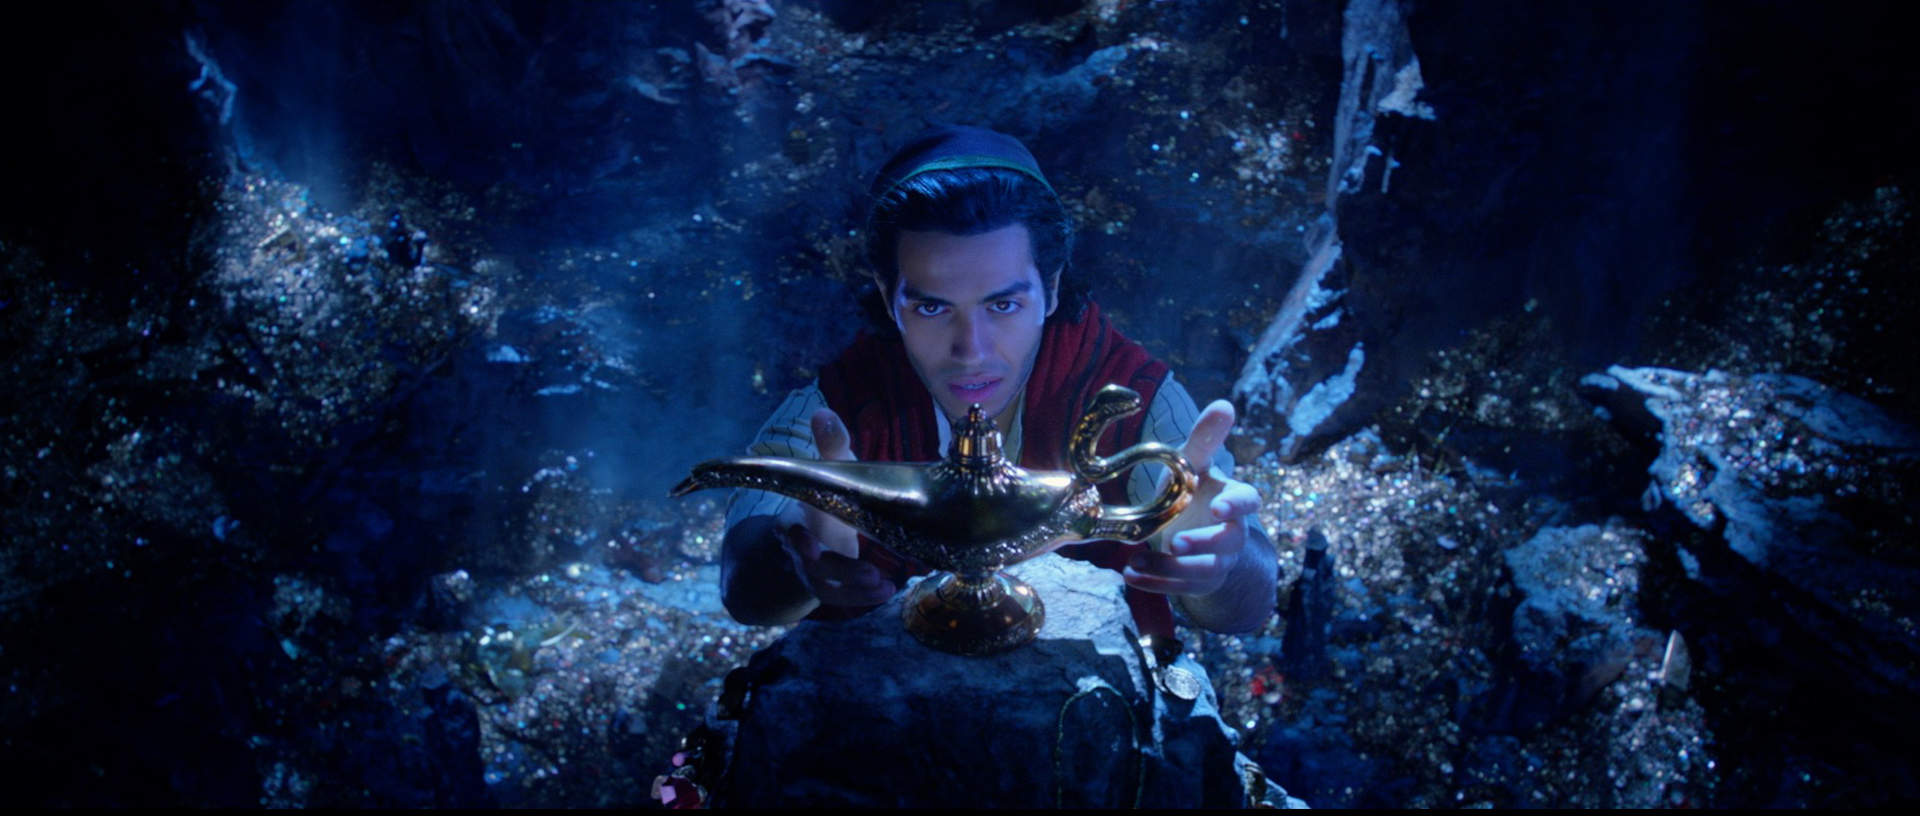 Aladdin - Szenenbild 3 von 5